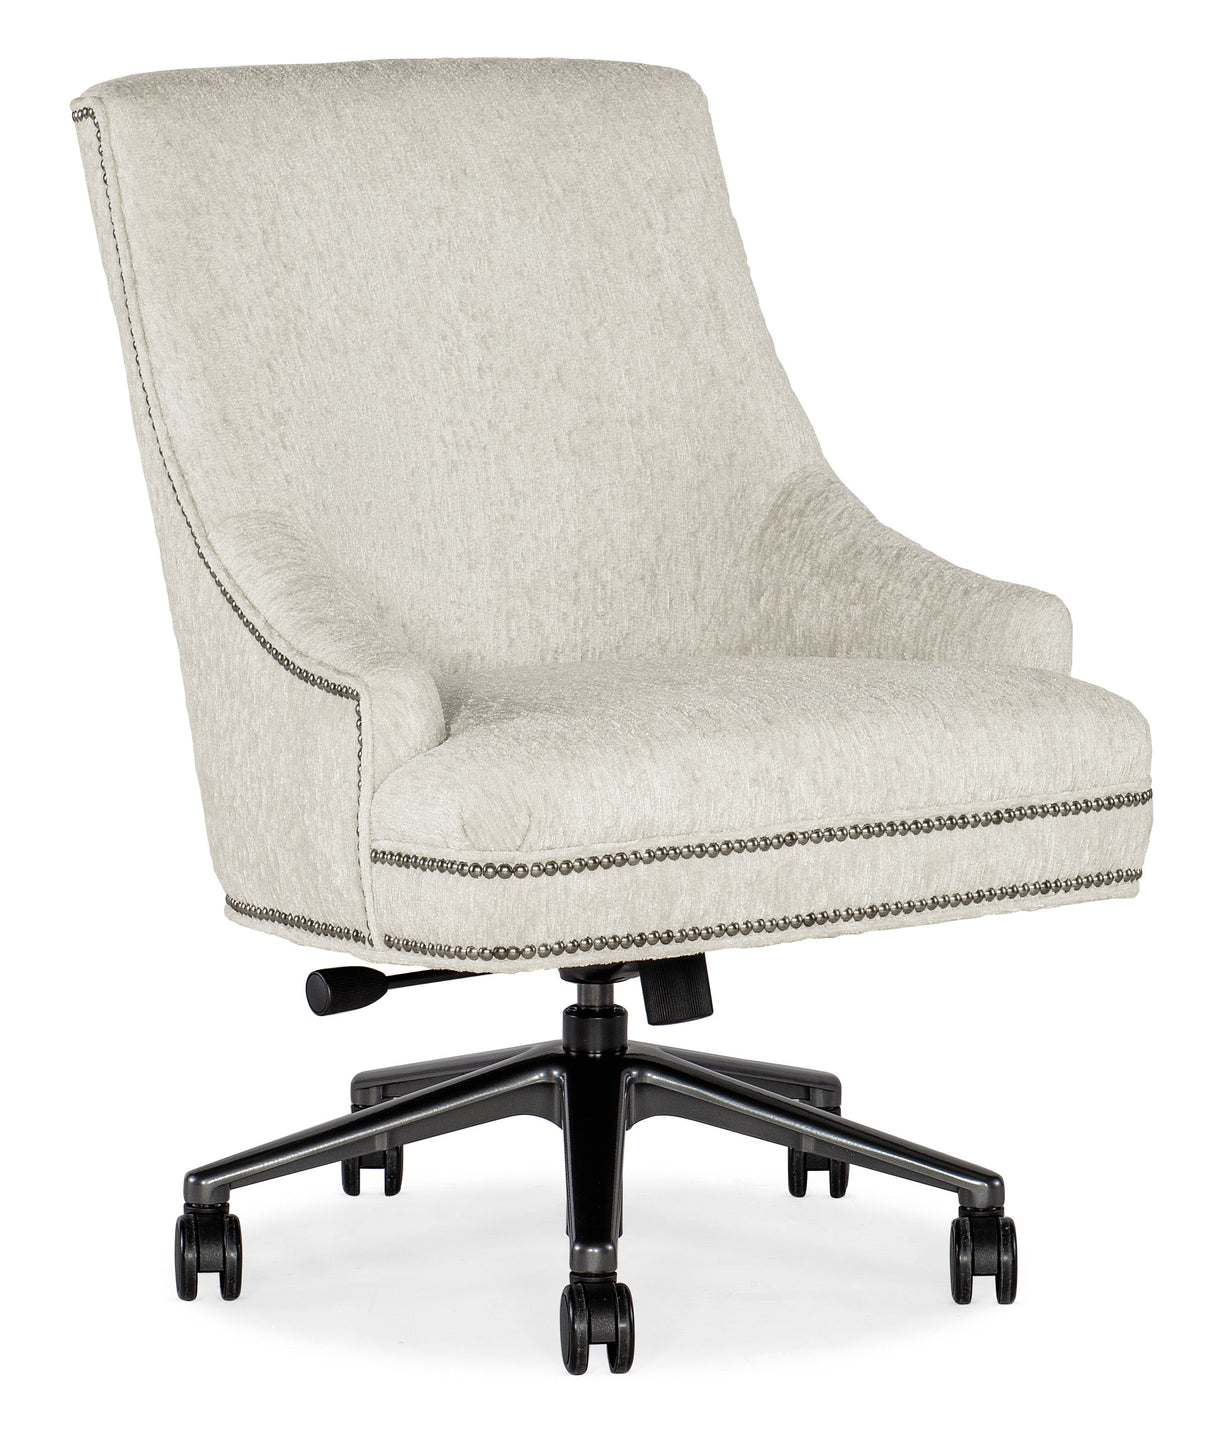 Edward - Home Office Swivel Tilt Chair